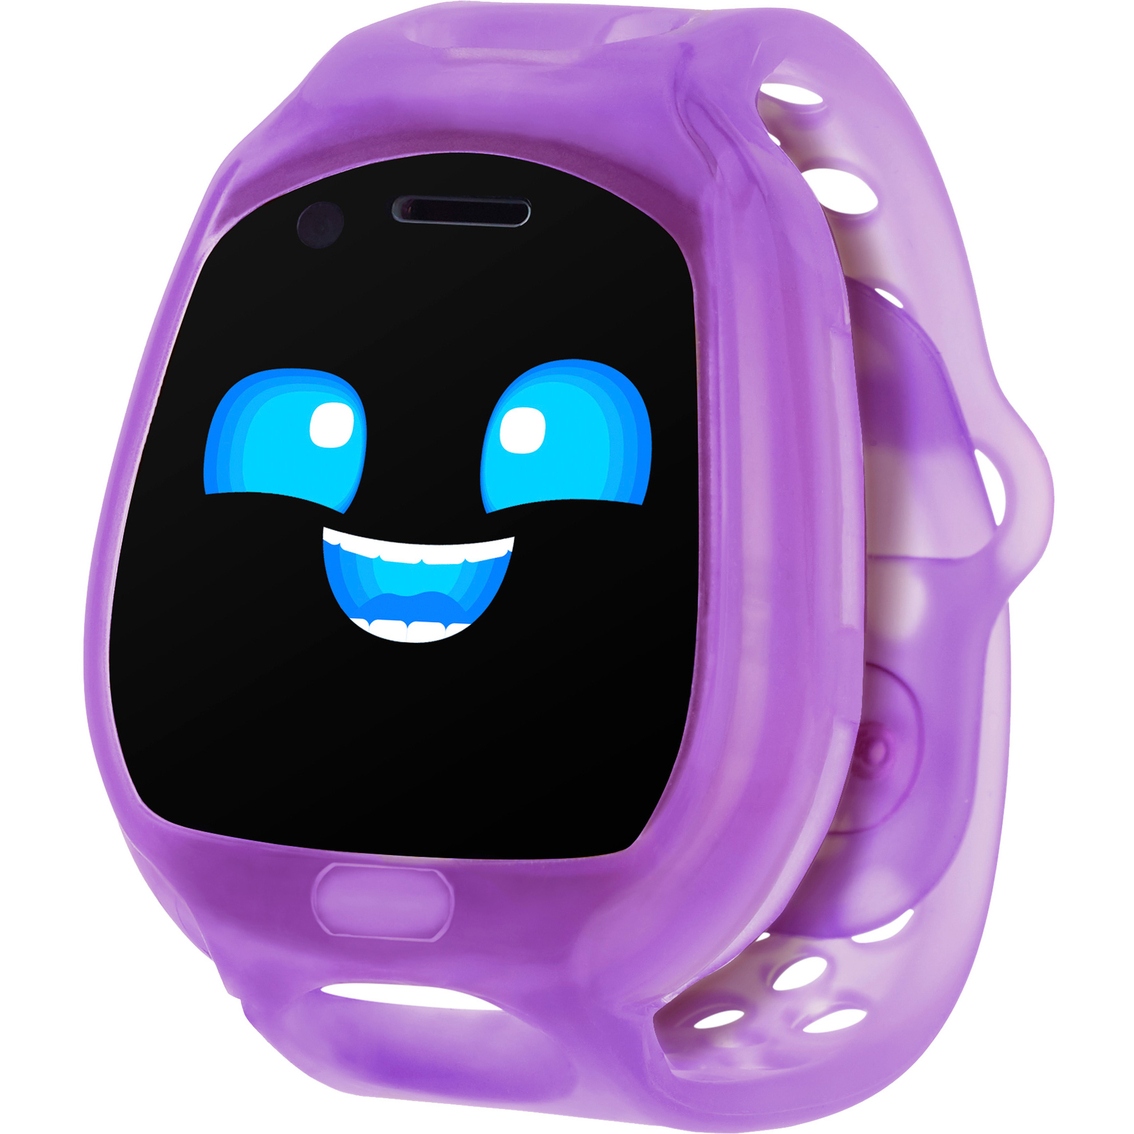 Little Tikes Tobi 2 Robot Smartwatch Purple - Image 2 of 7